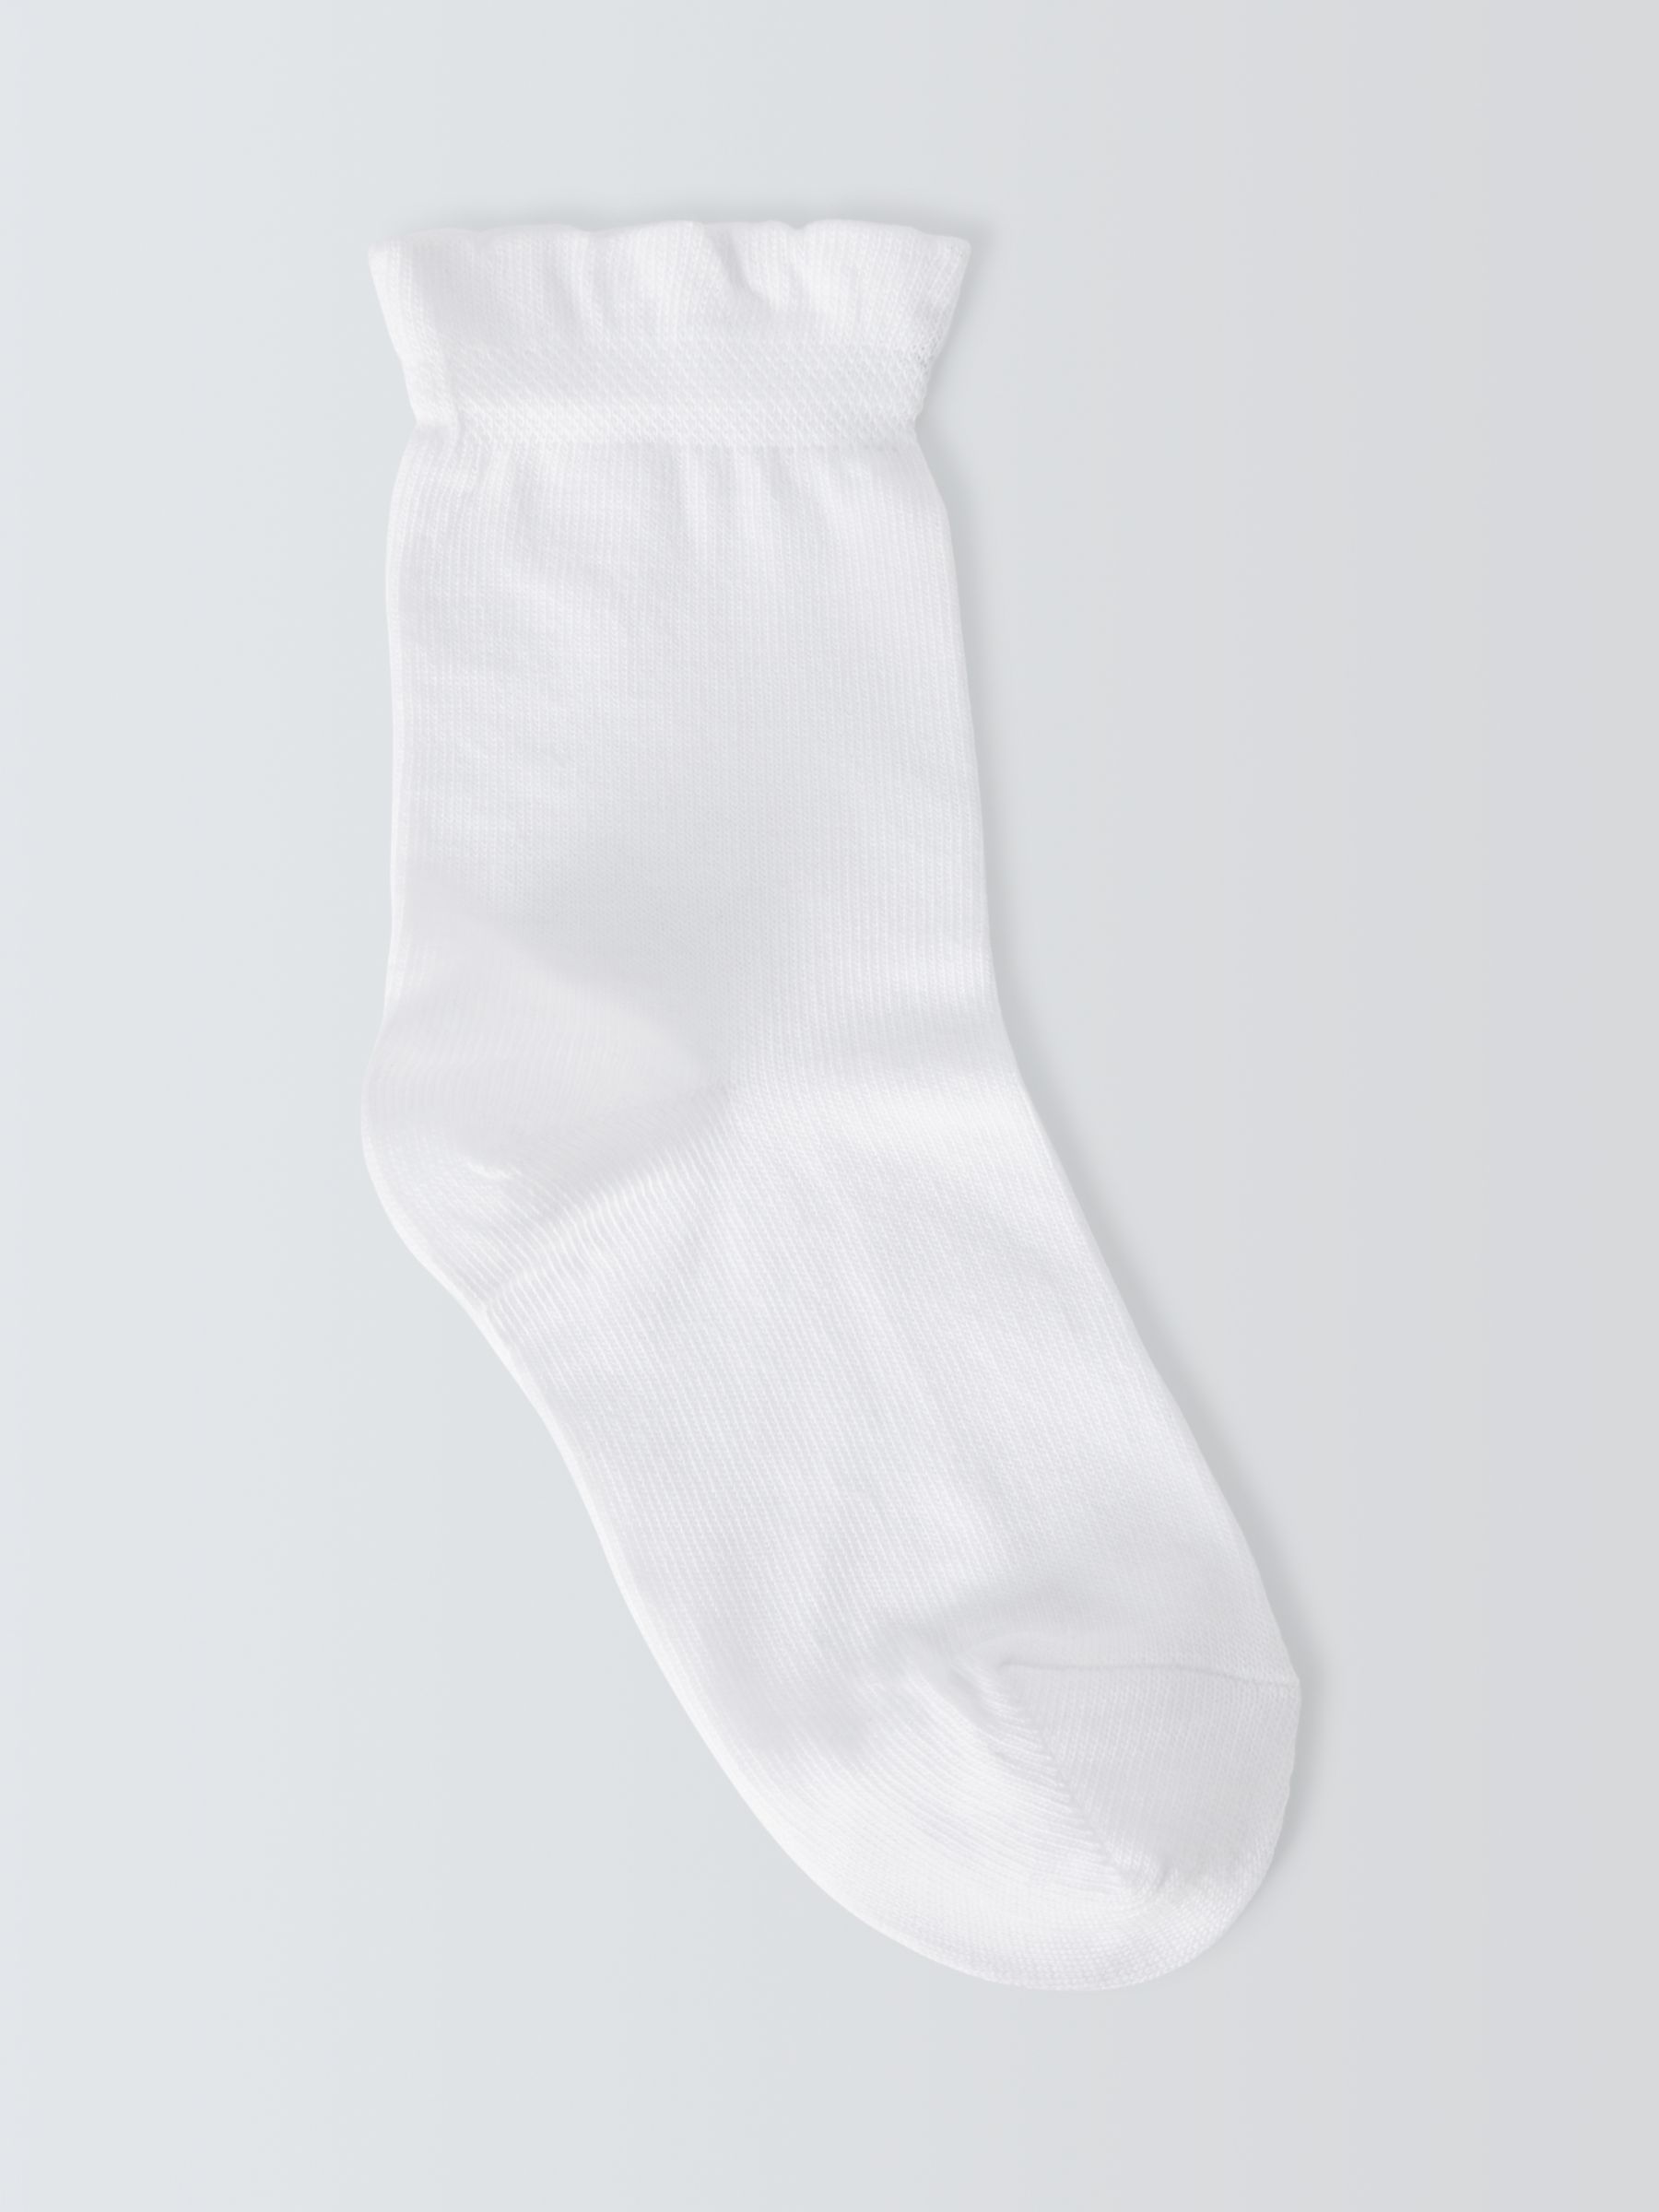 Second Life Marketplace - Tintable white socks on floor (4 pairs)